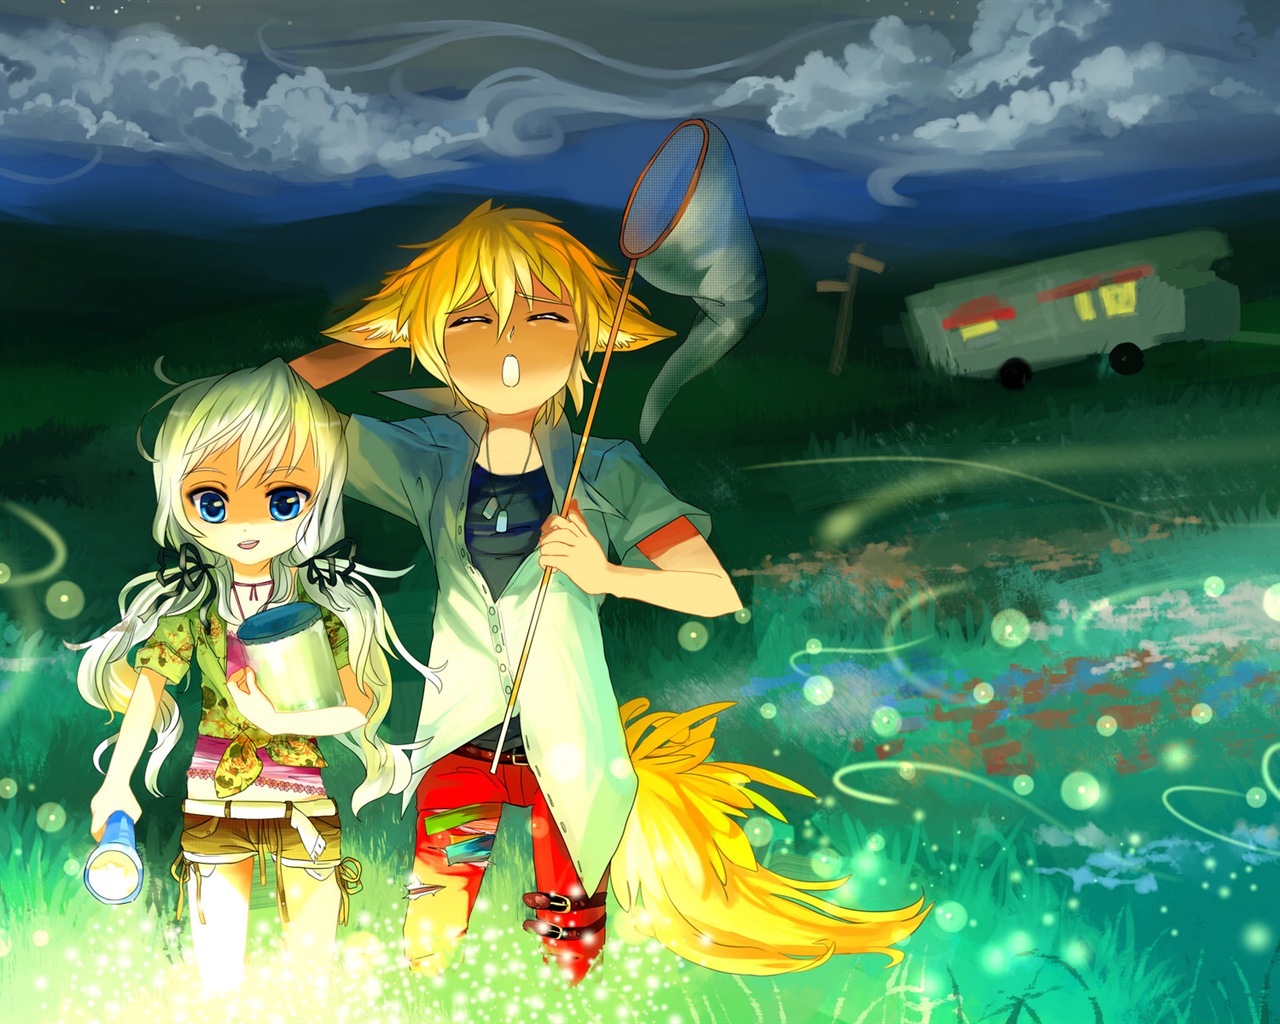 Firefly Summer beautiful anime wallpaper #15 - 1280x1024